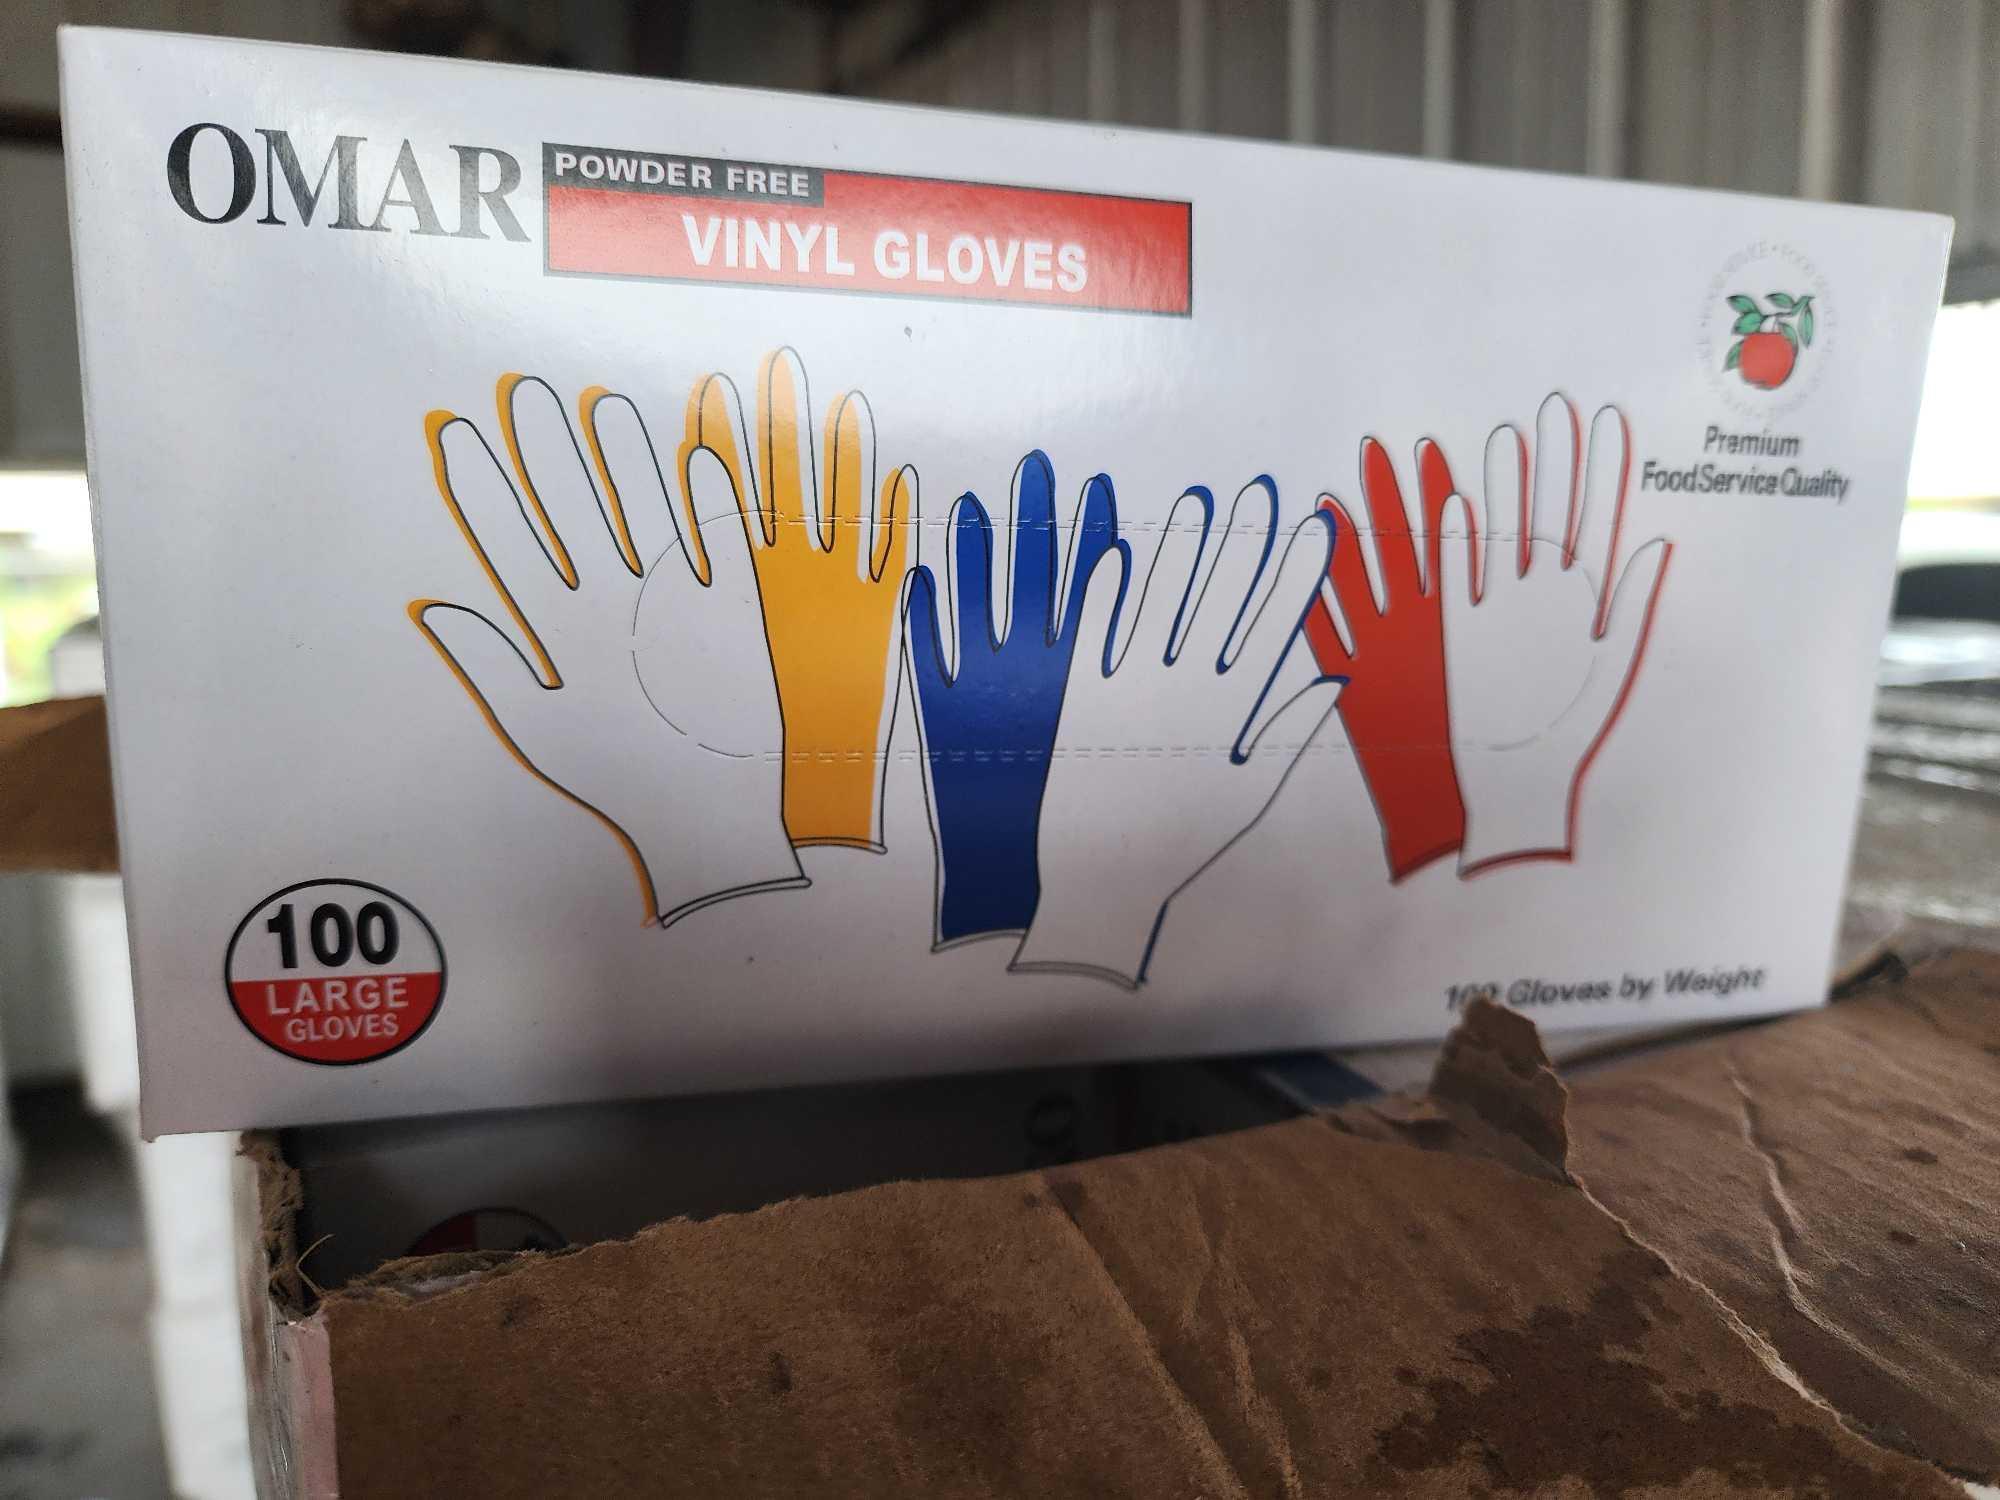 Boxes of Omar Powder-Free Vinyl Gloves on 2 Pallets